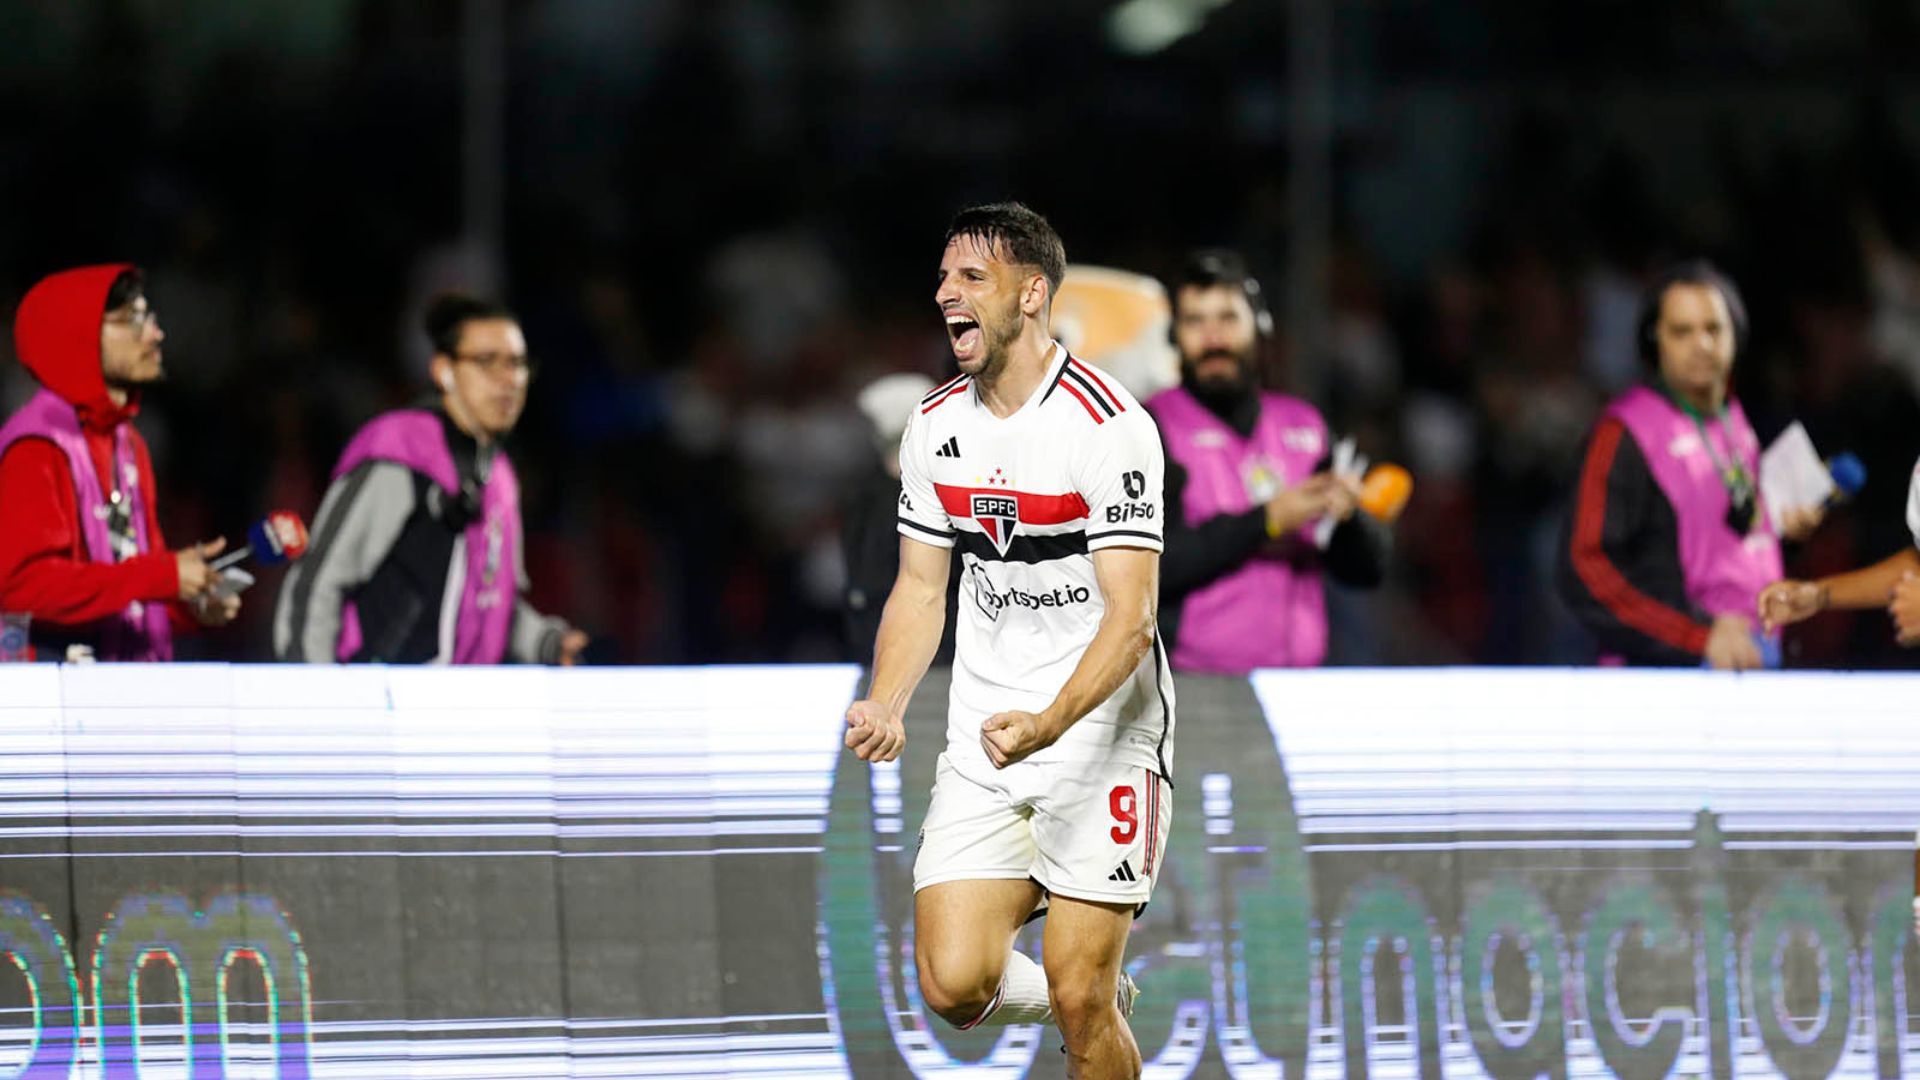 Calleri celebrating a goal against América-MG (Credit: Paulo Pinto / São Paulo FC)